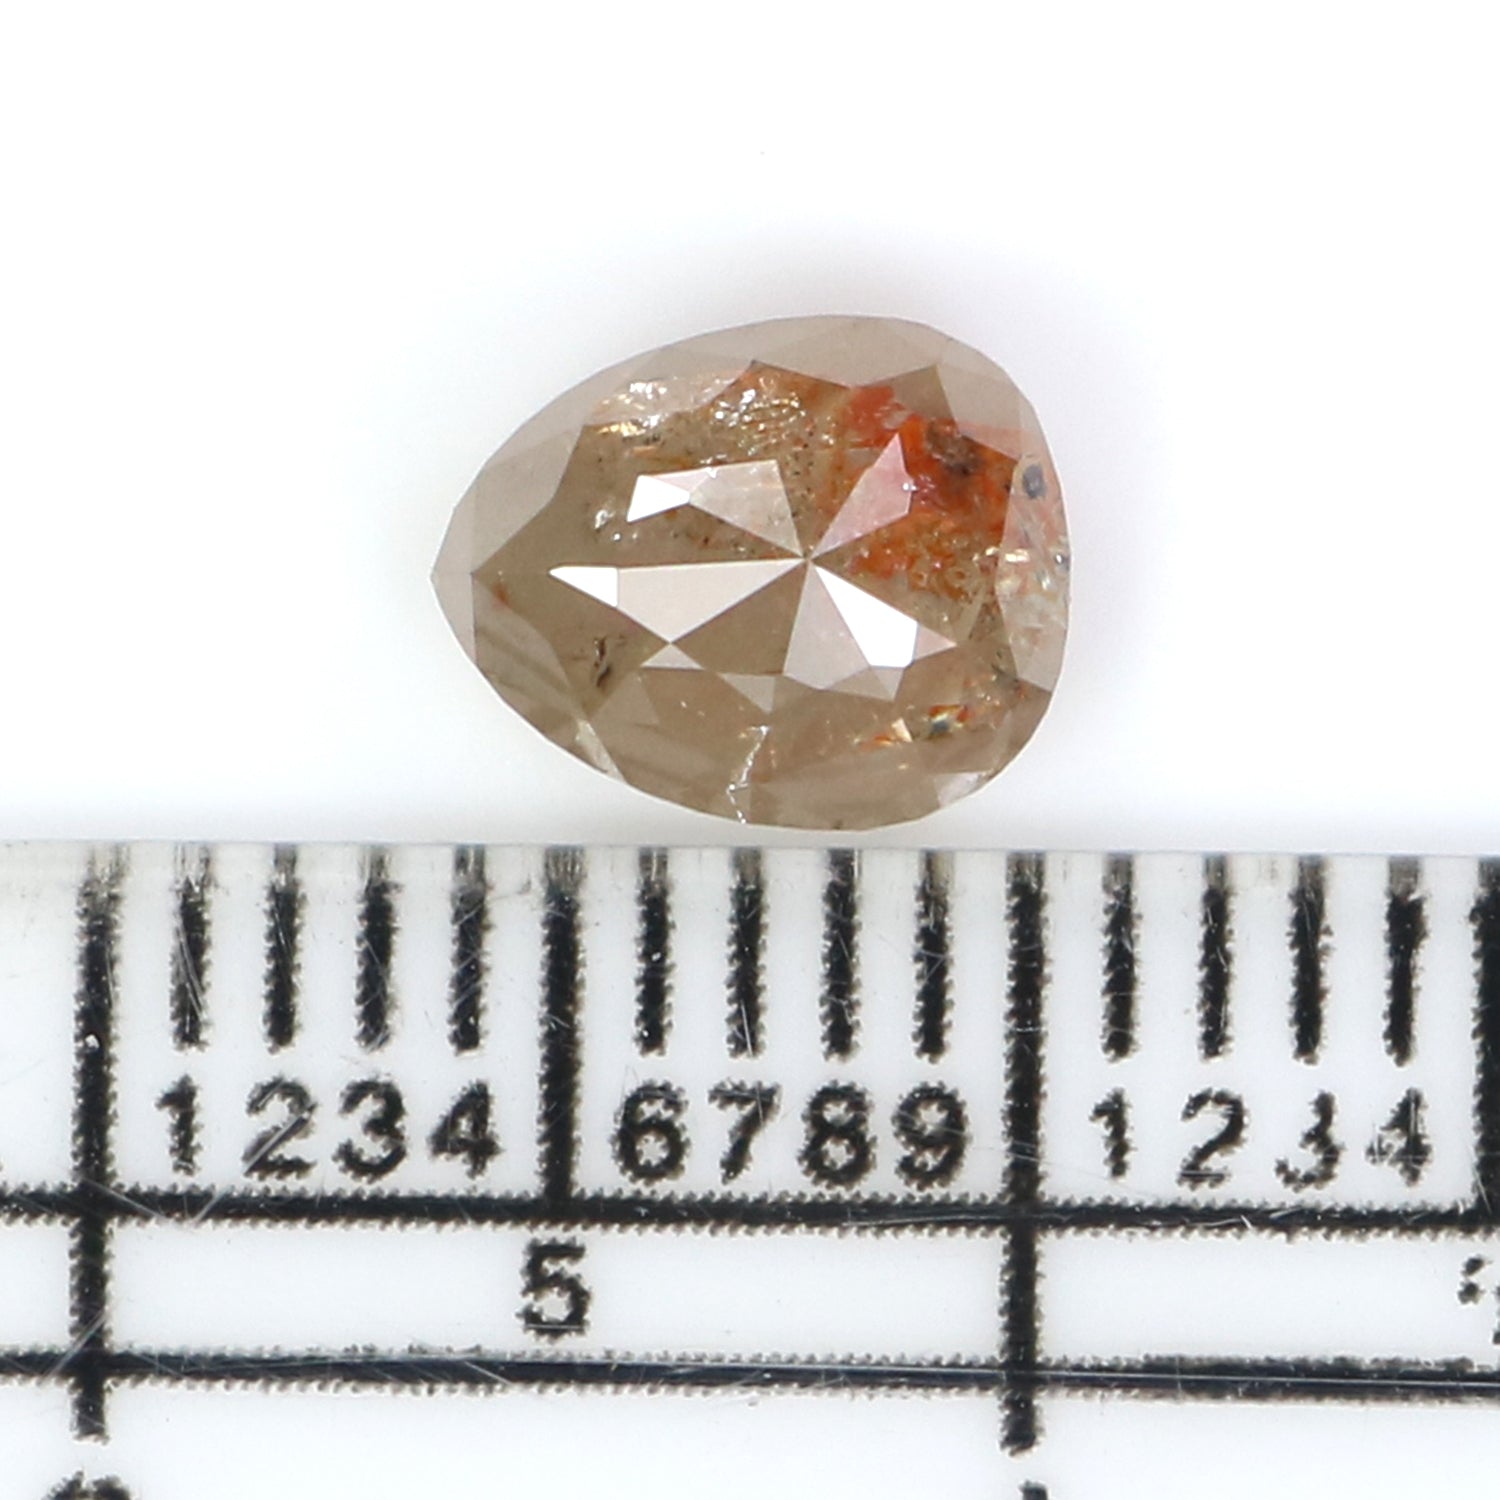 Natural Loose Pear Diamond, Brown Color Pear Cut Diamond, Natural Loose Diamond, Pear Rose Cut Diamond, 1.23 CT Pear Shape Diamond KDK2687